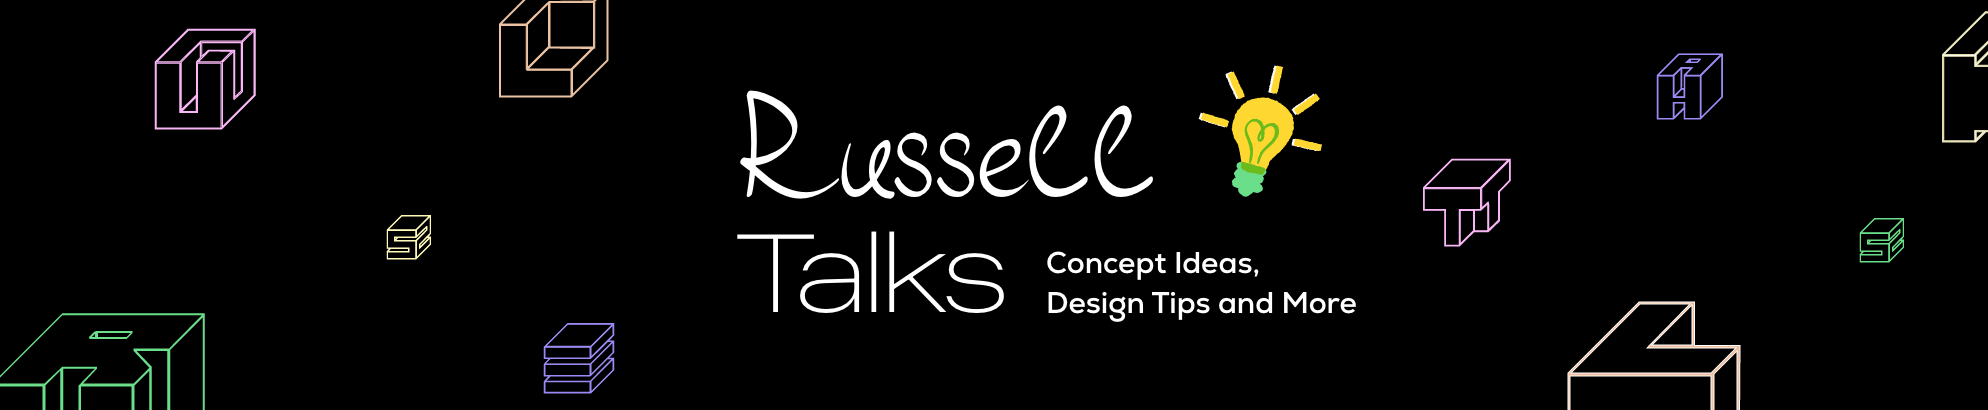 Banner de perfil de Concepts by Russell